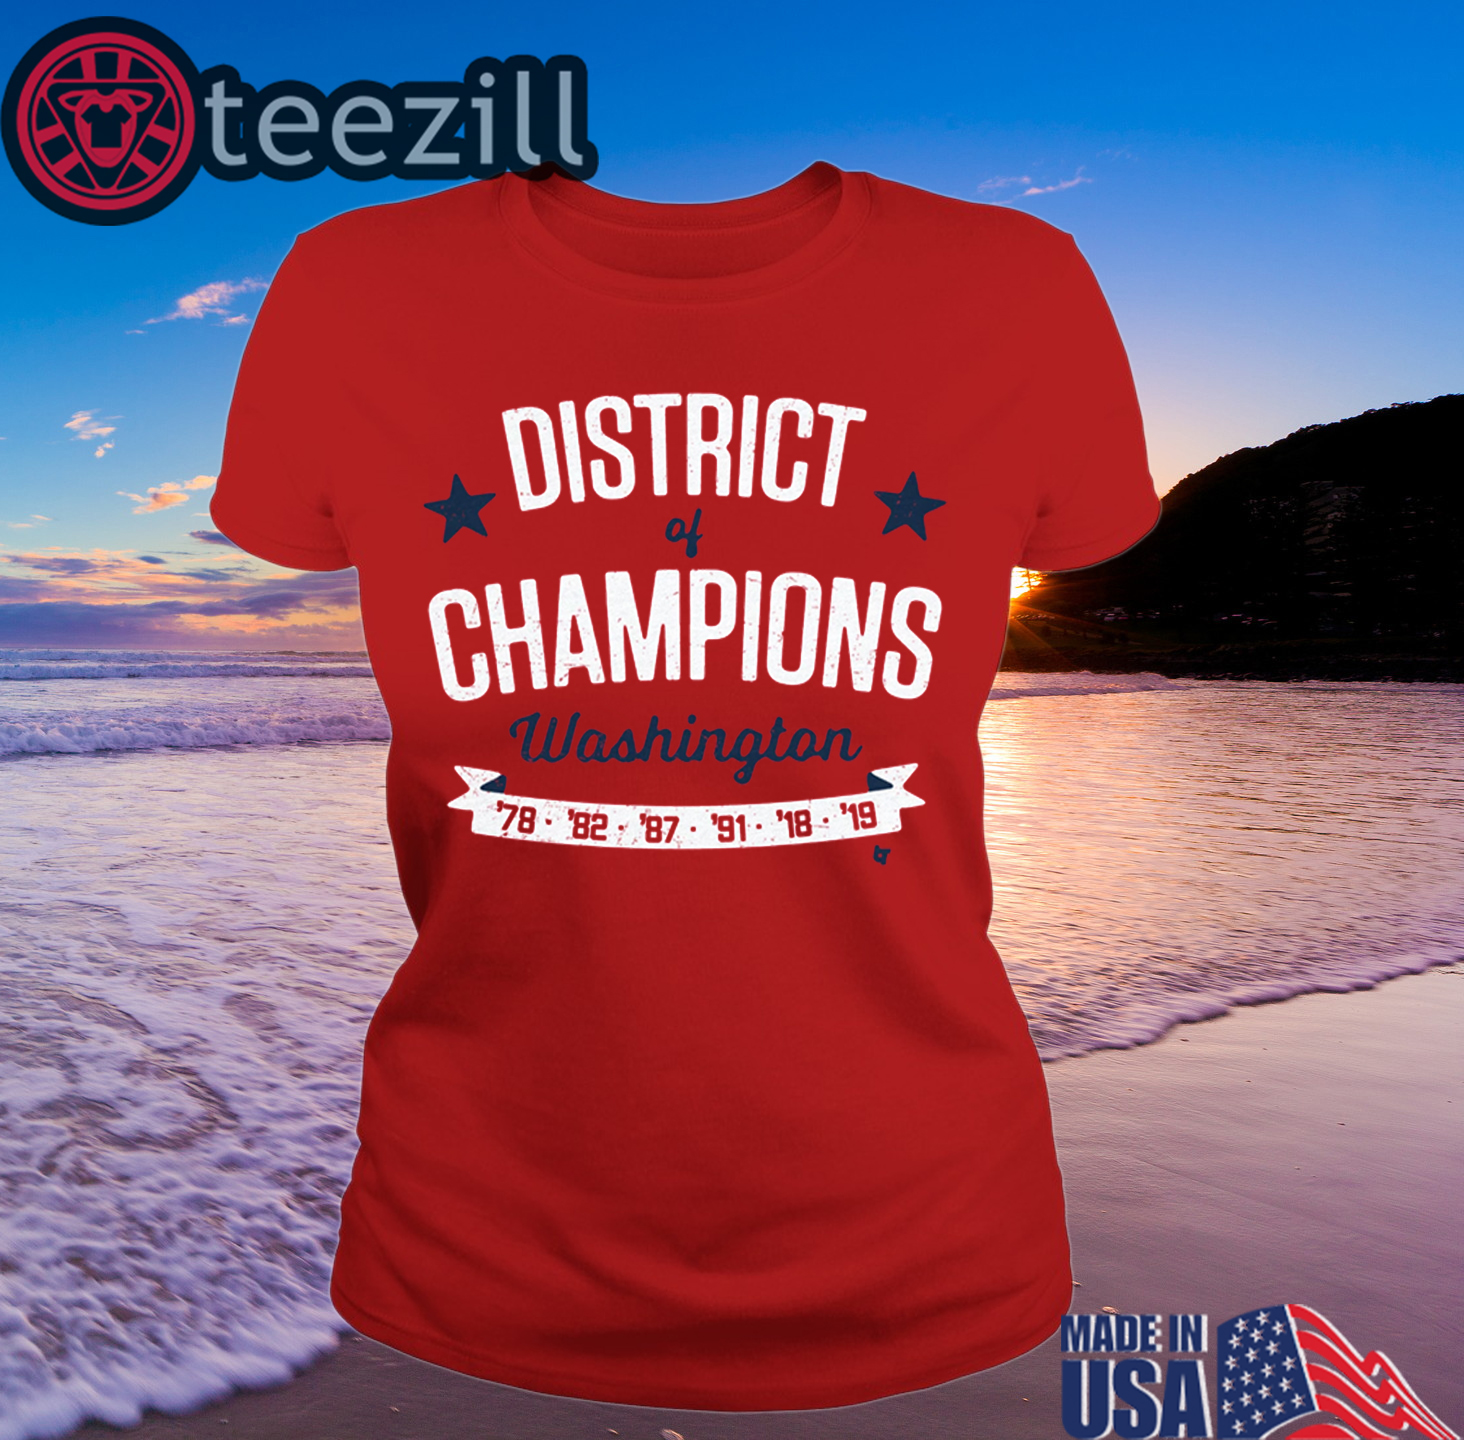 District of Champions Shirt Washington Dc Sports - teezill